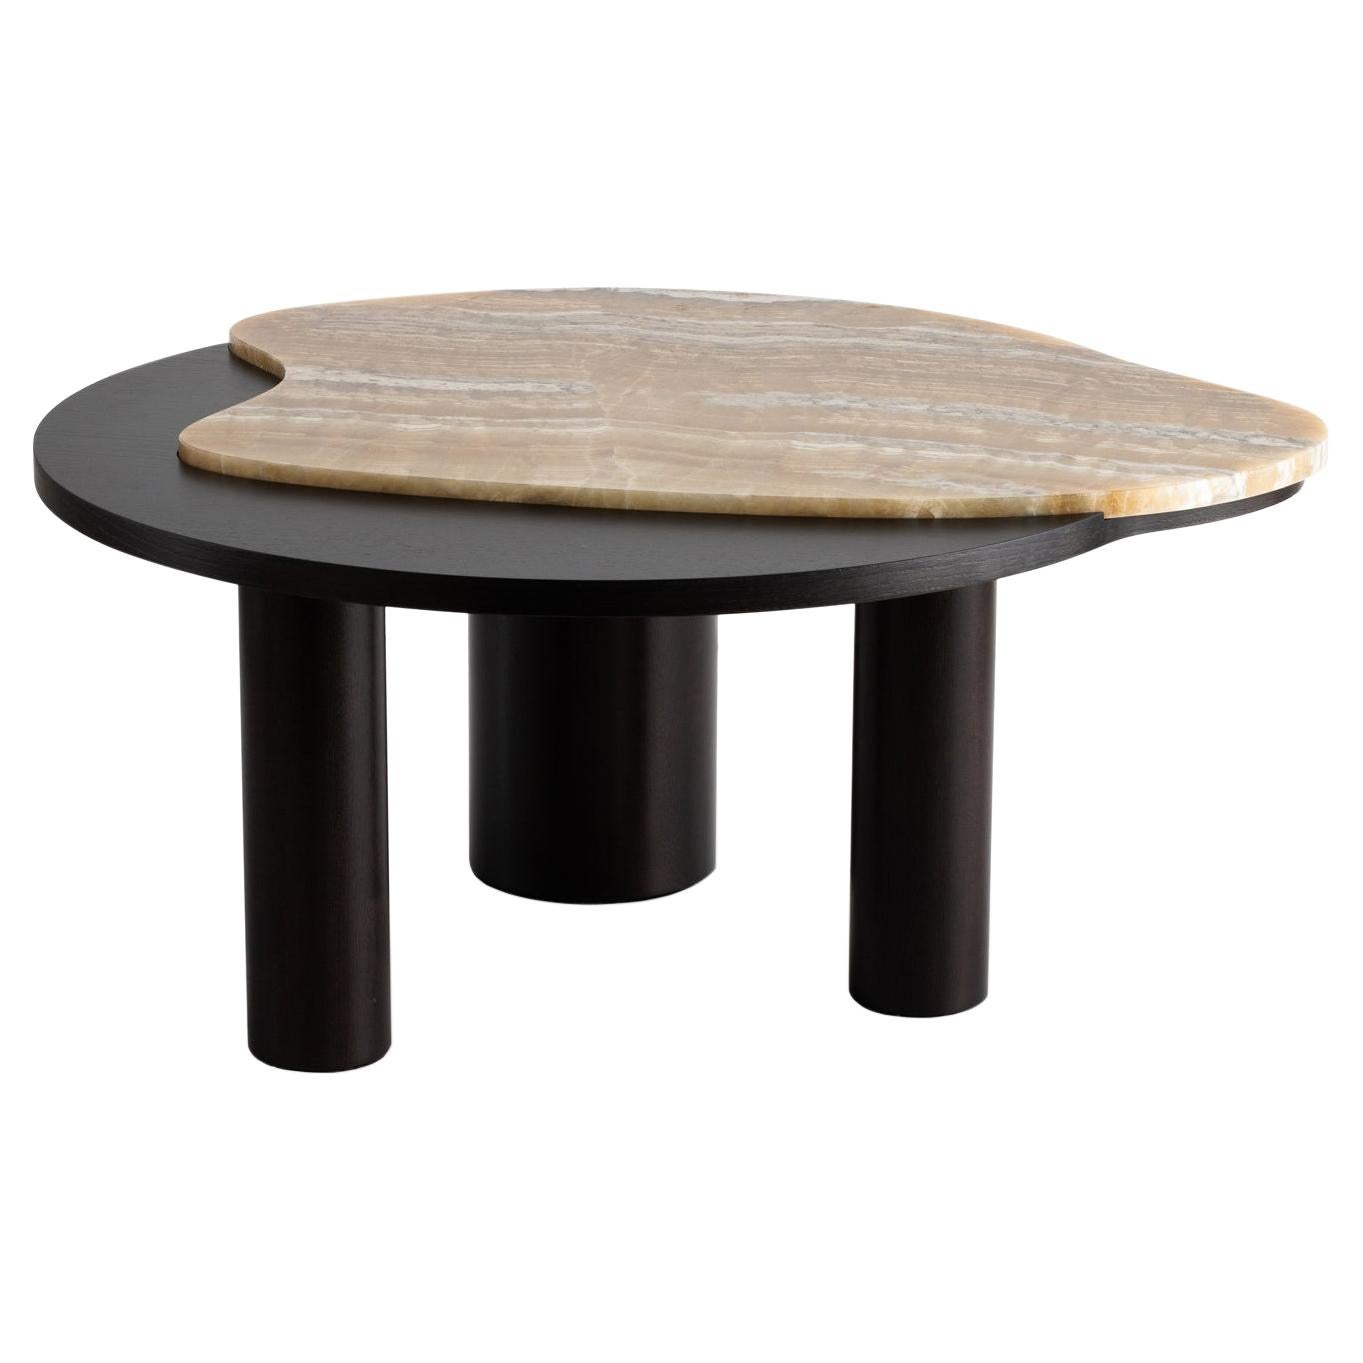 Modern Bordeira Coffee Table, Shadow Onyx, Handmade in Portugal by Greenapple